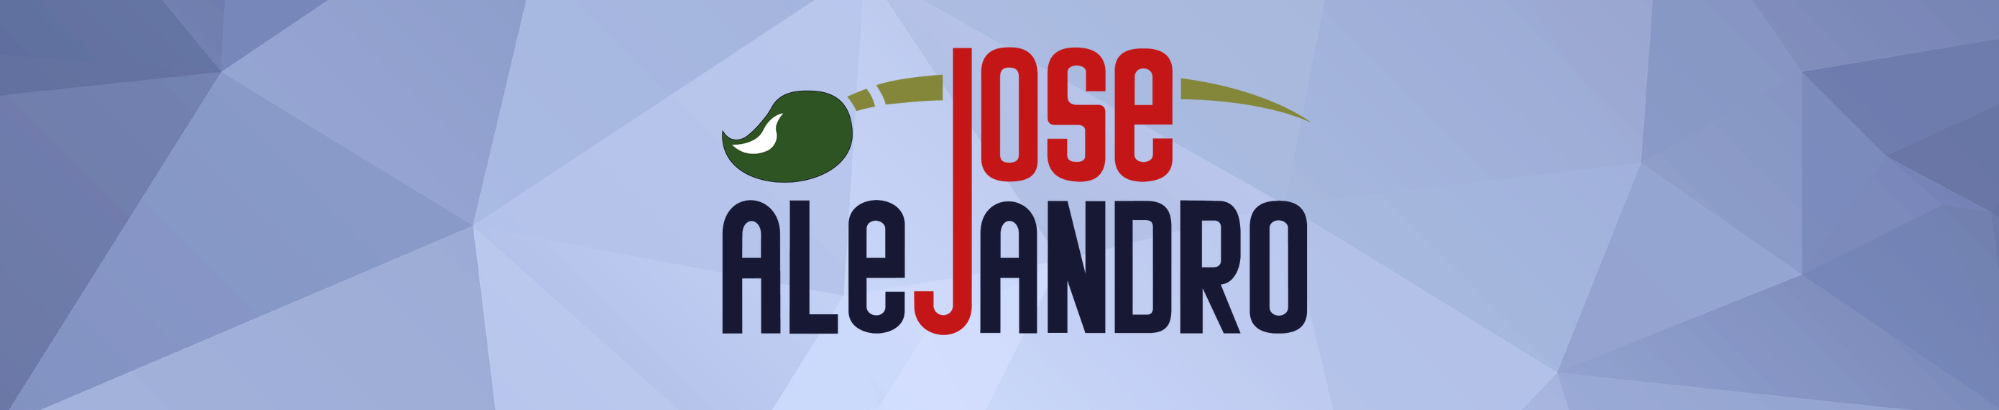 Profielbanner van Jose Alejandro